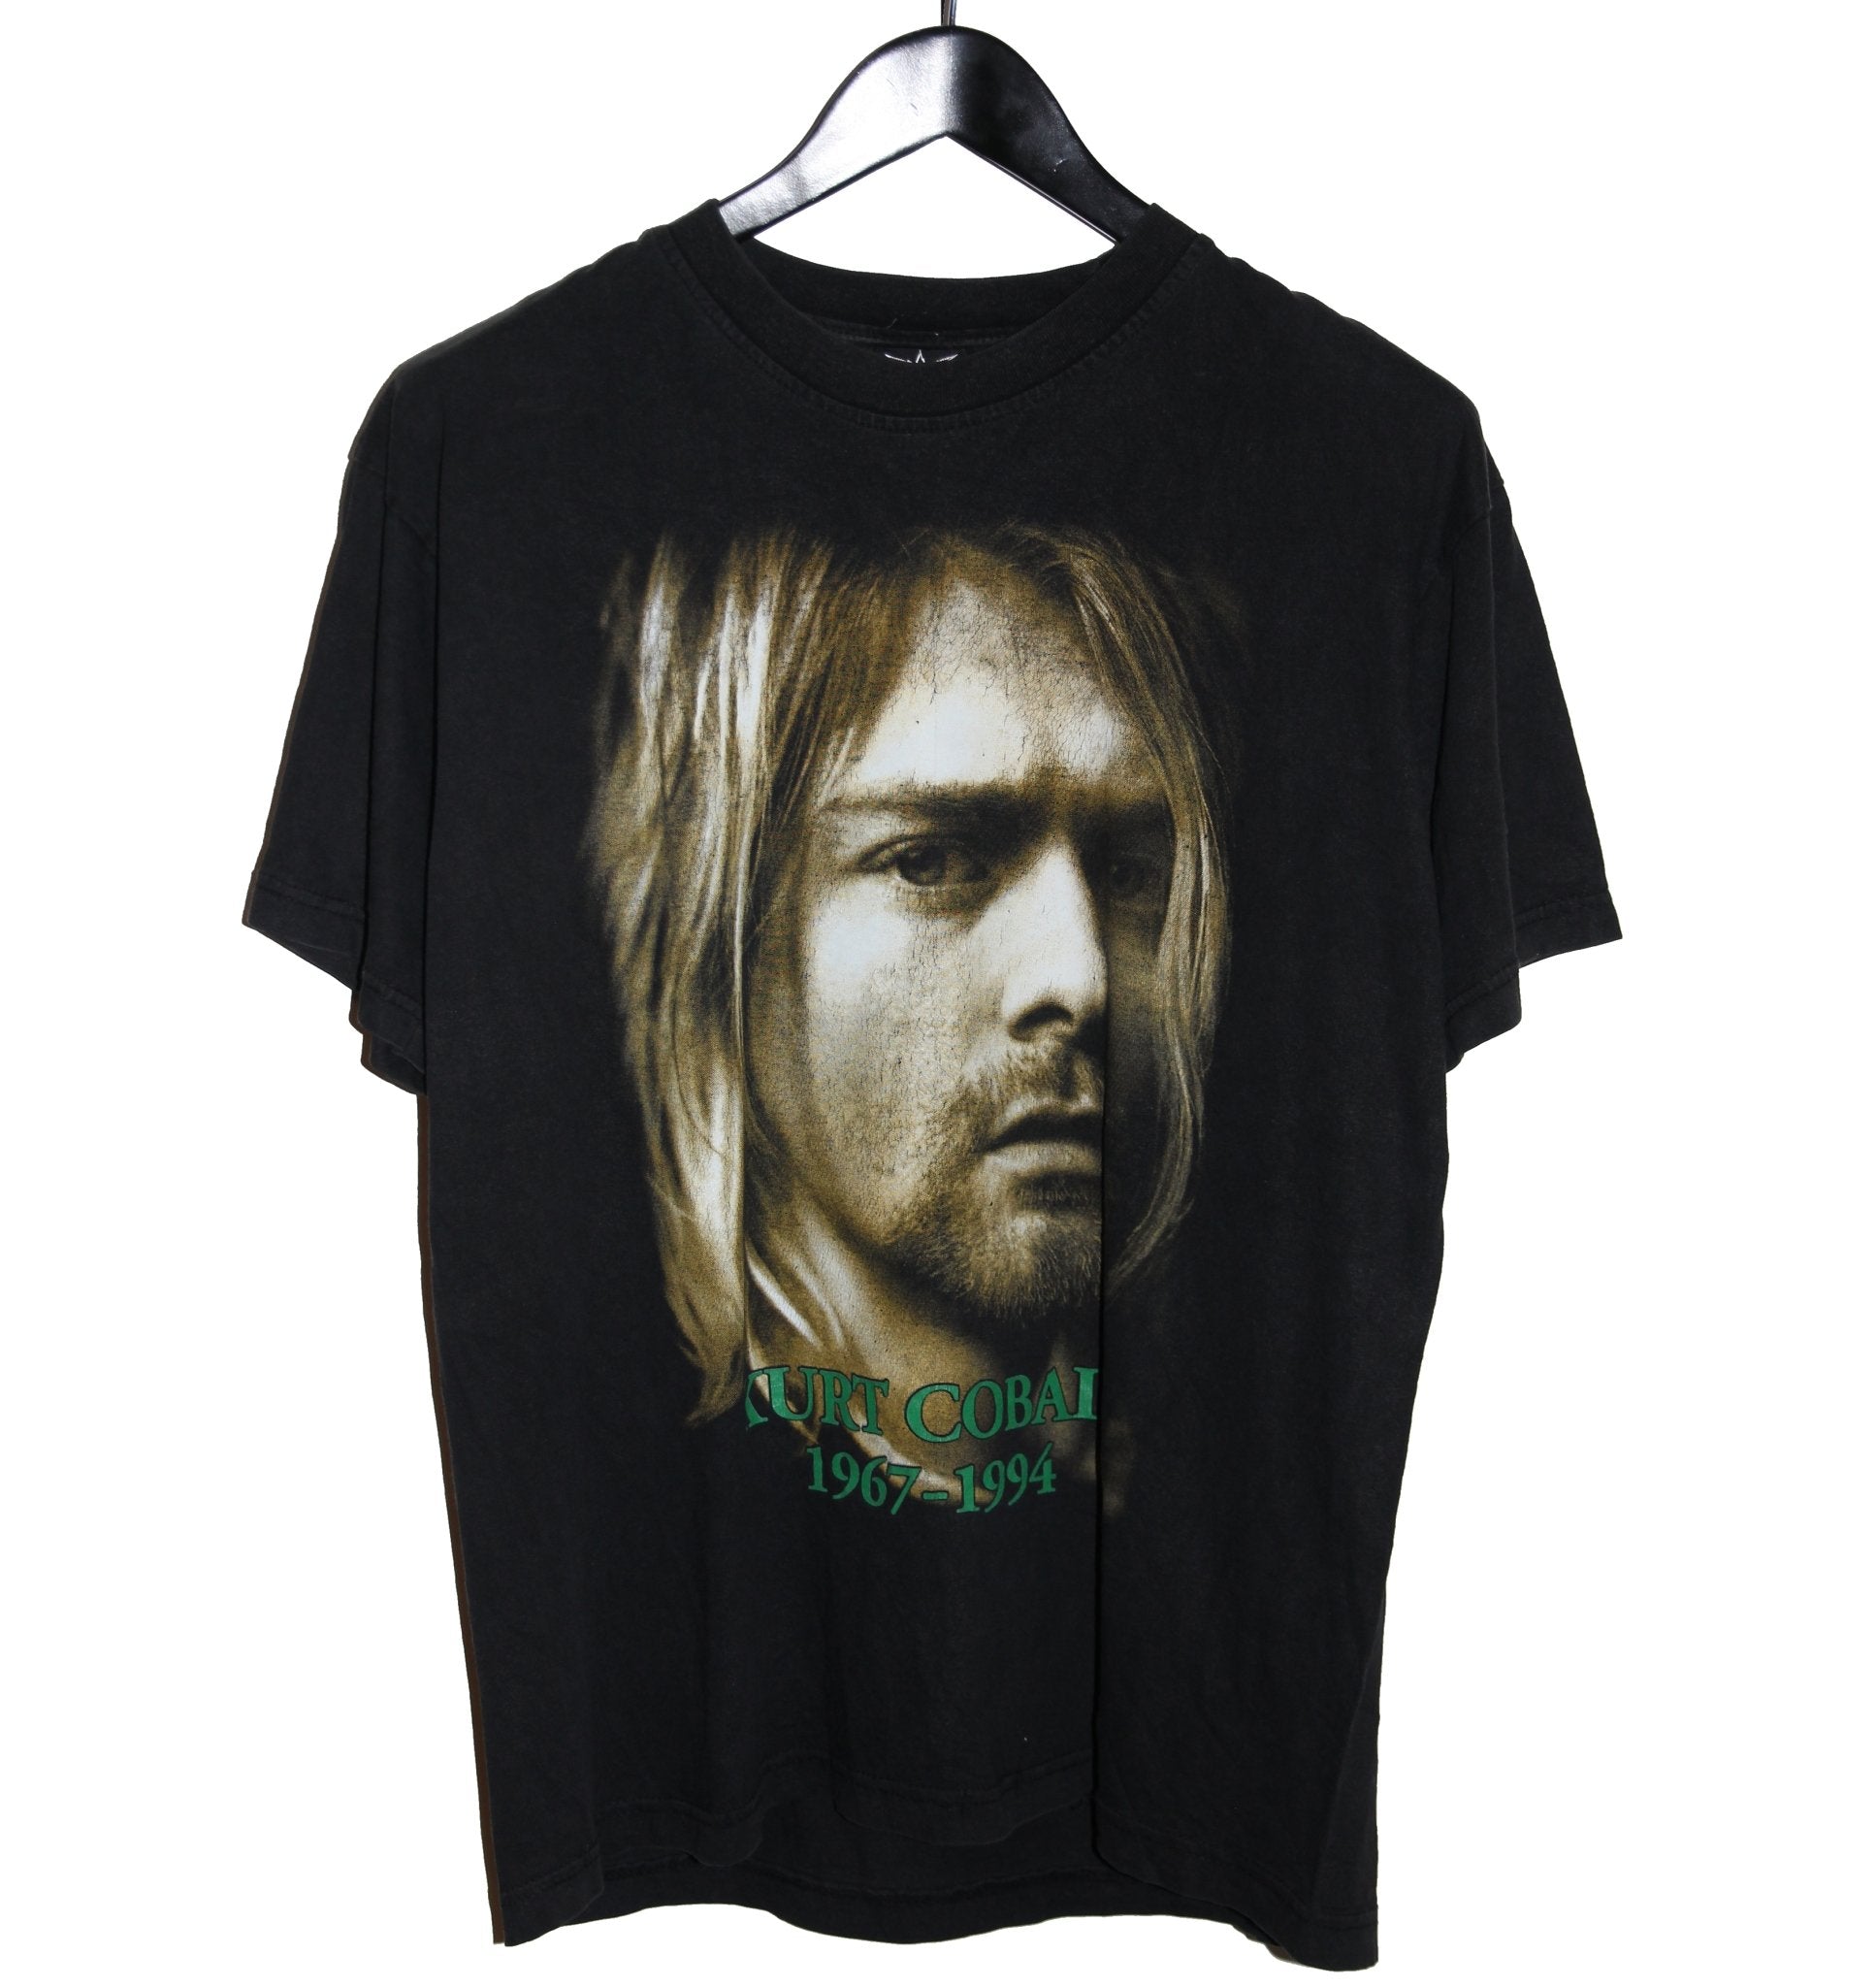 Kurt Cobain 2000's Memorial Shirt - Faded AU